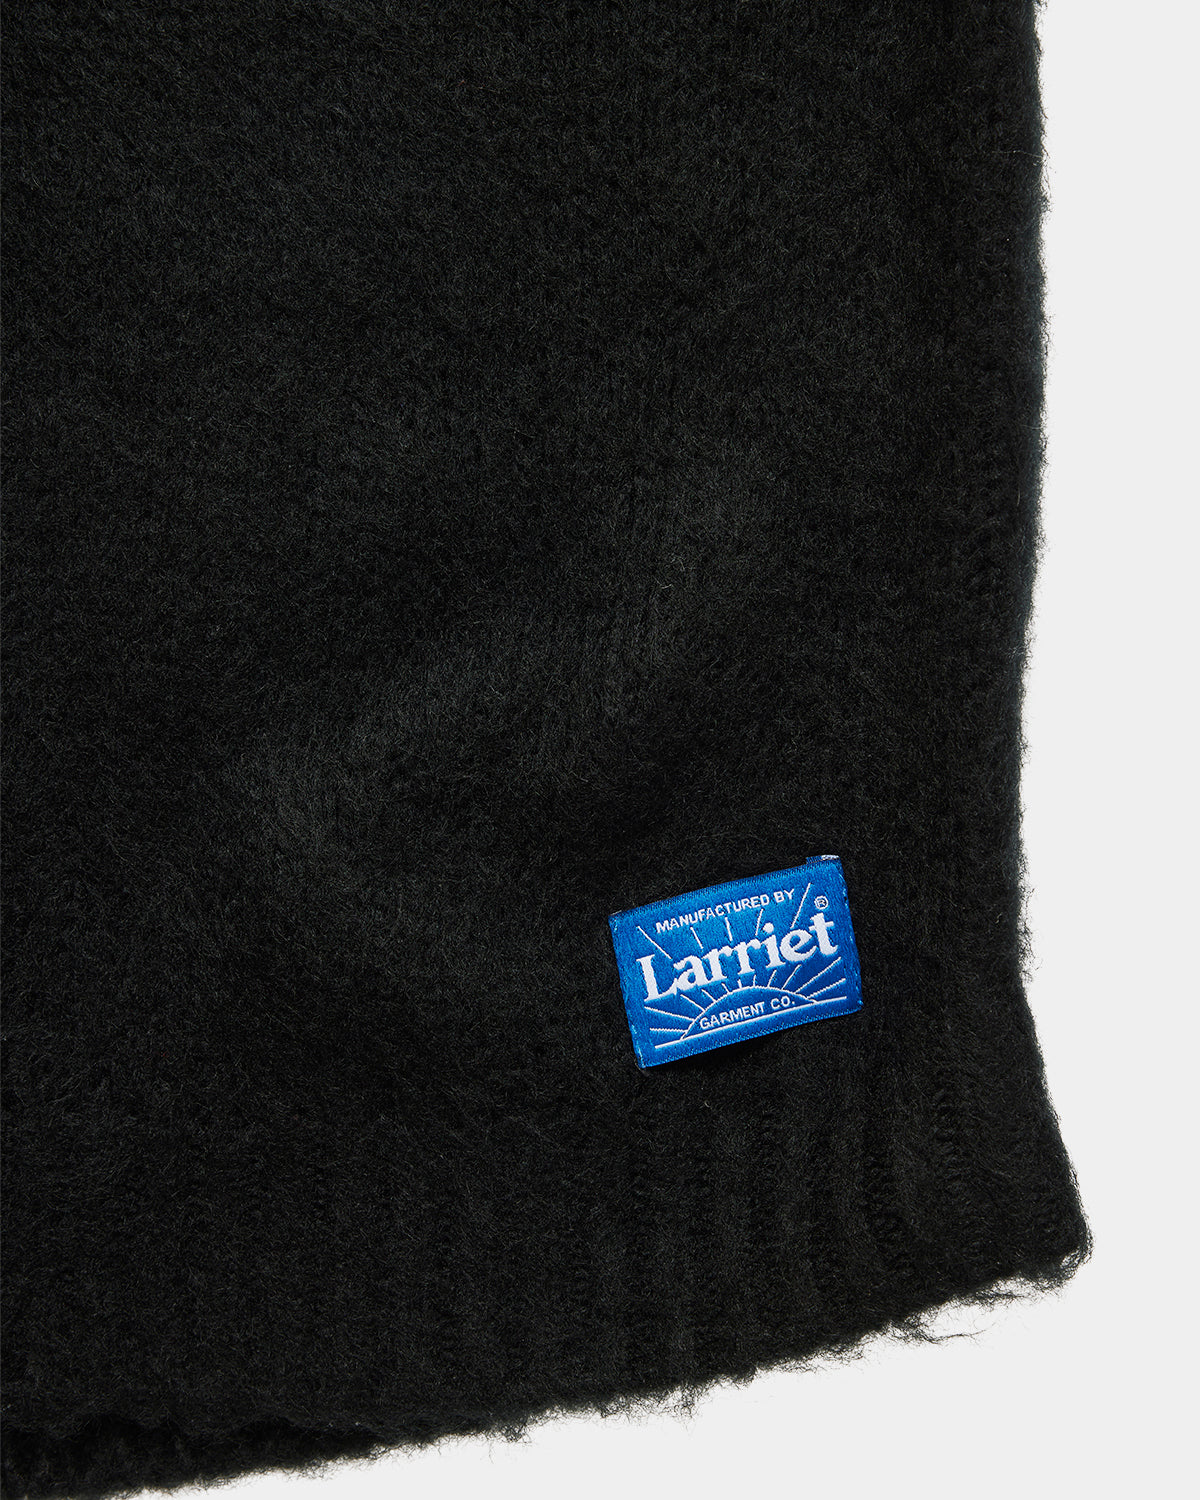 Larriet - Bison Vest - Black